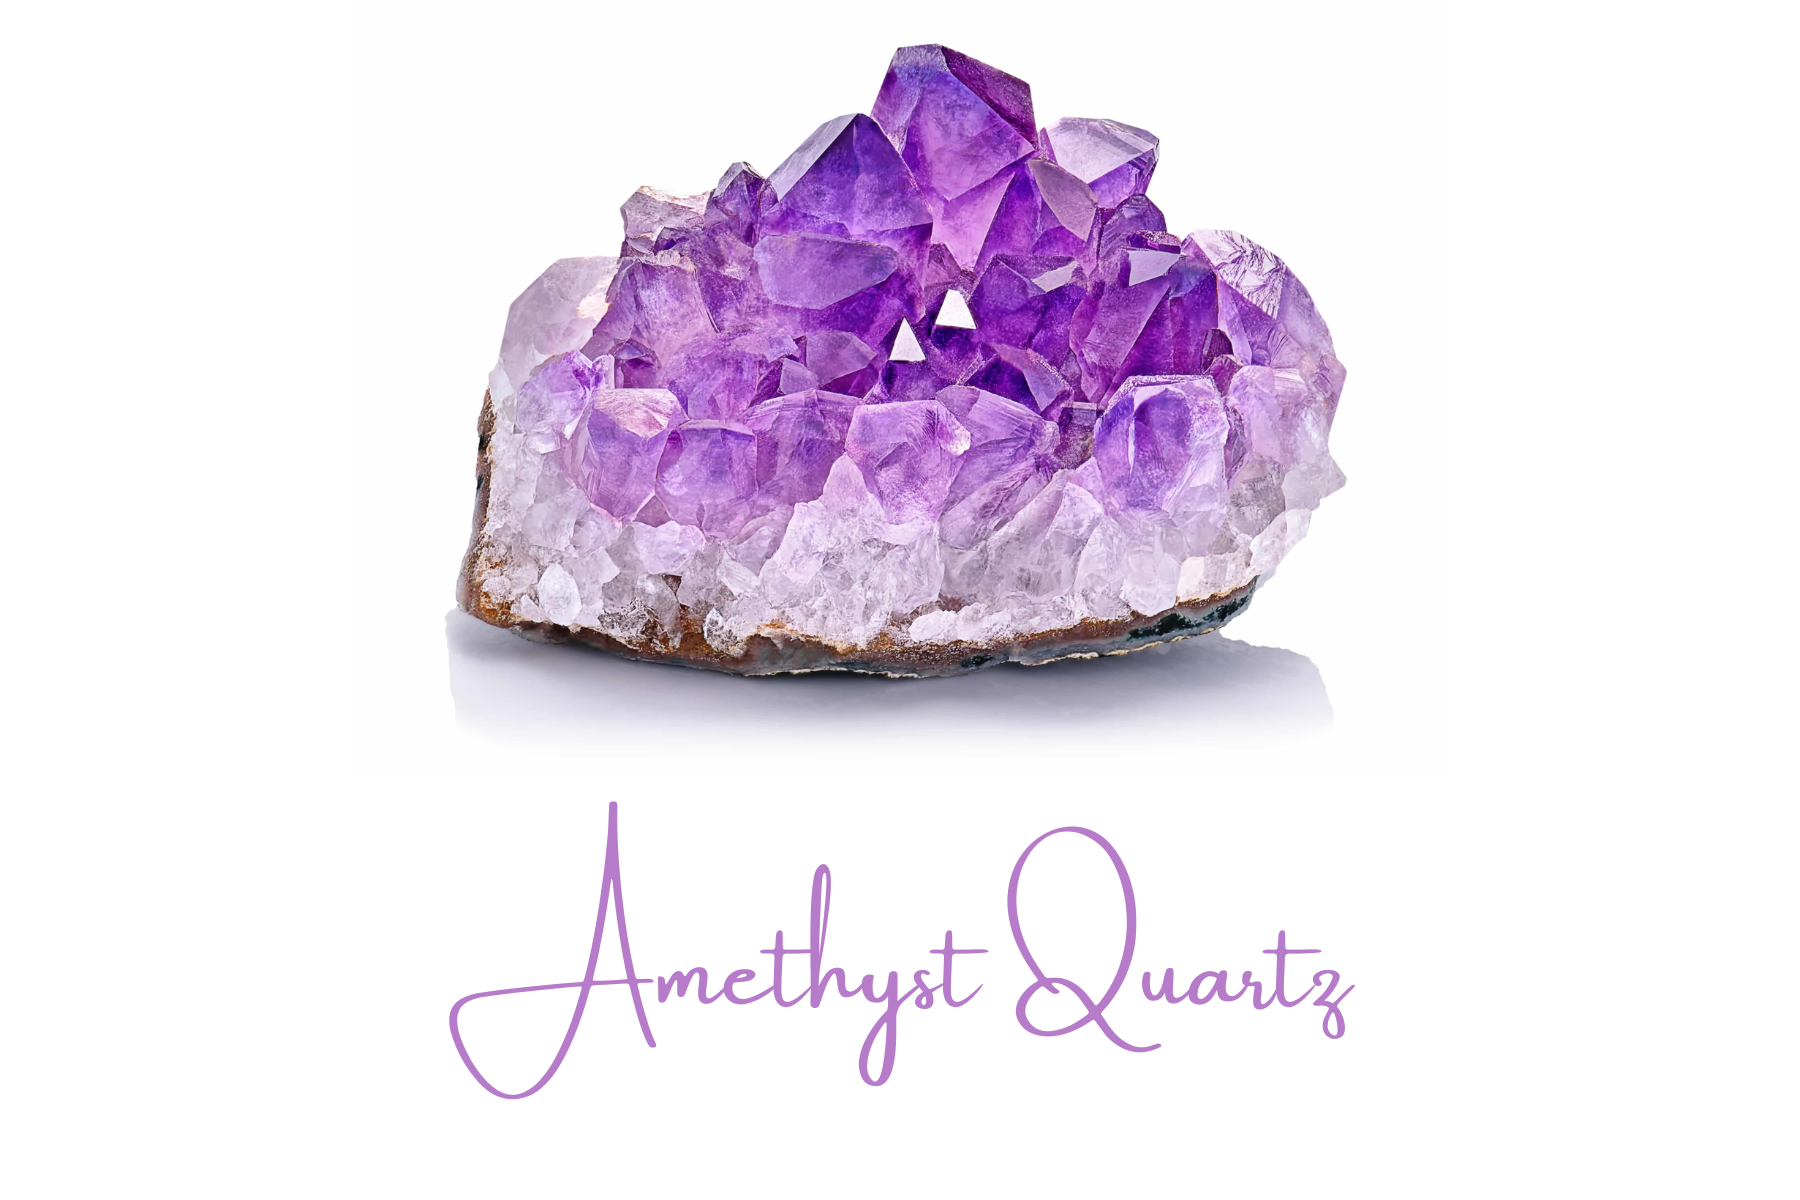 Purple Amethyst quartz crystal